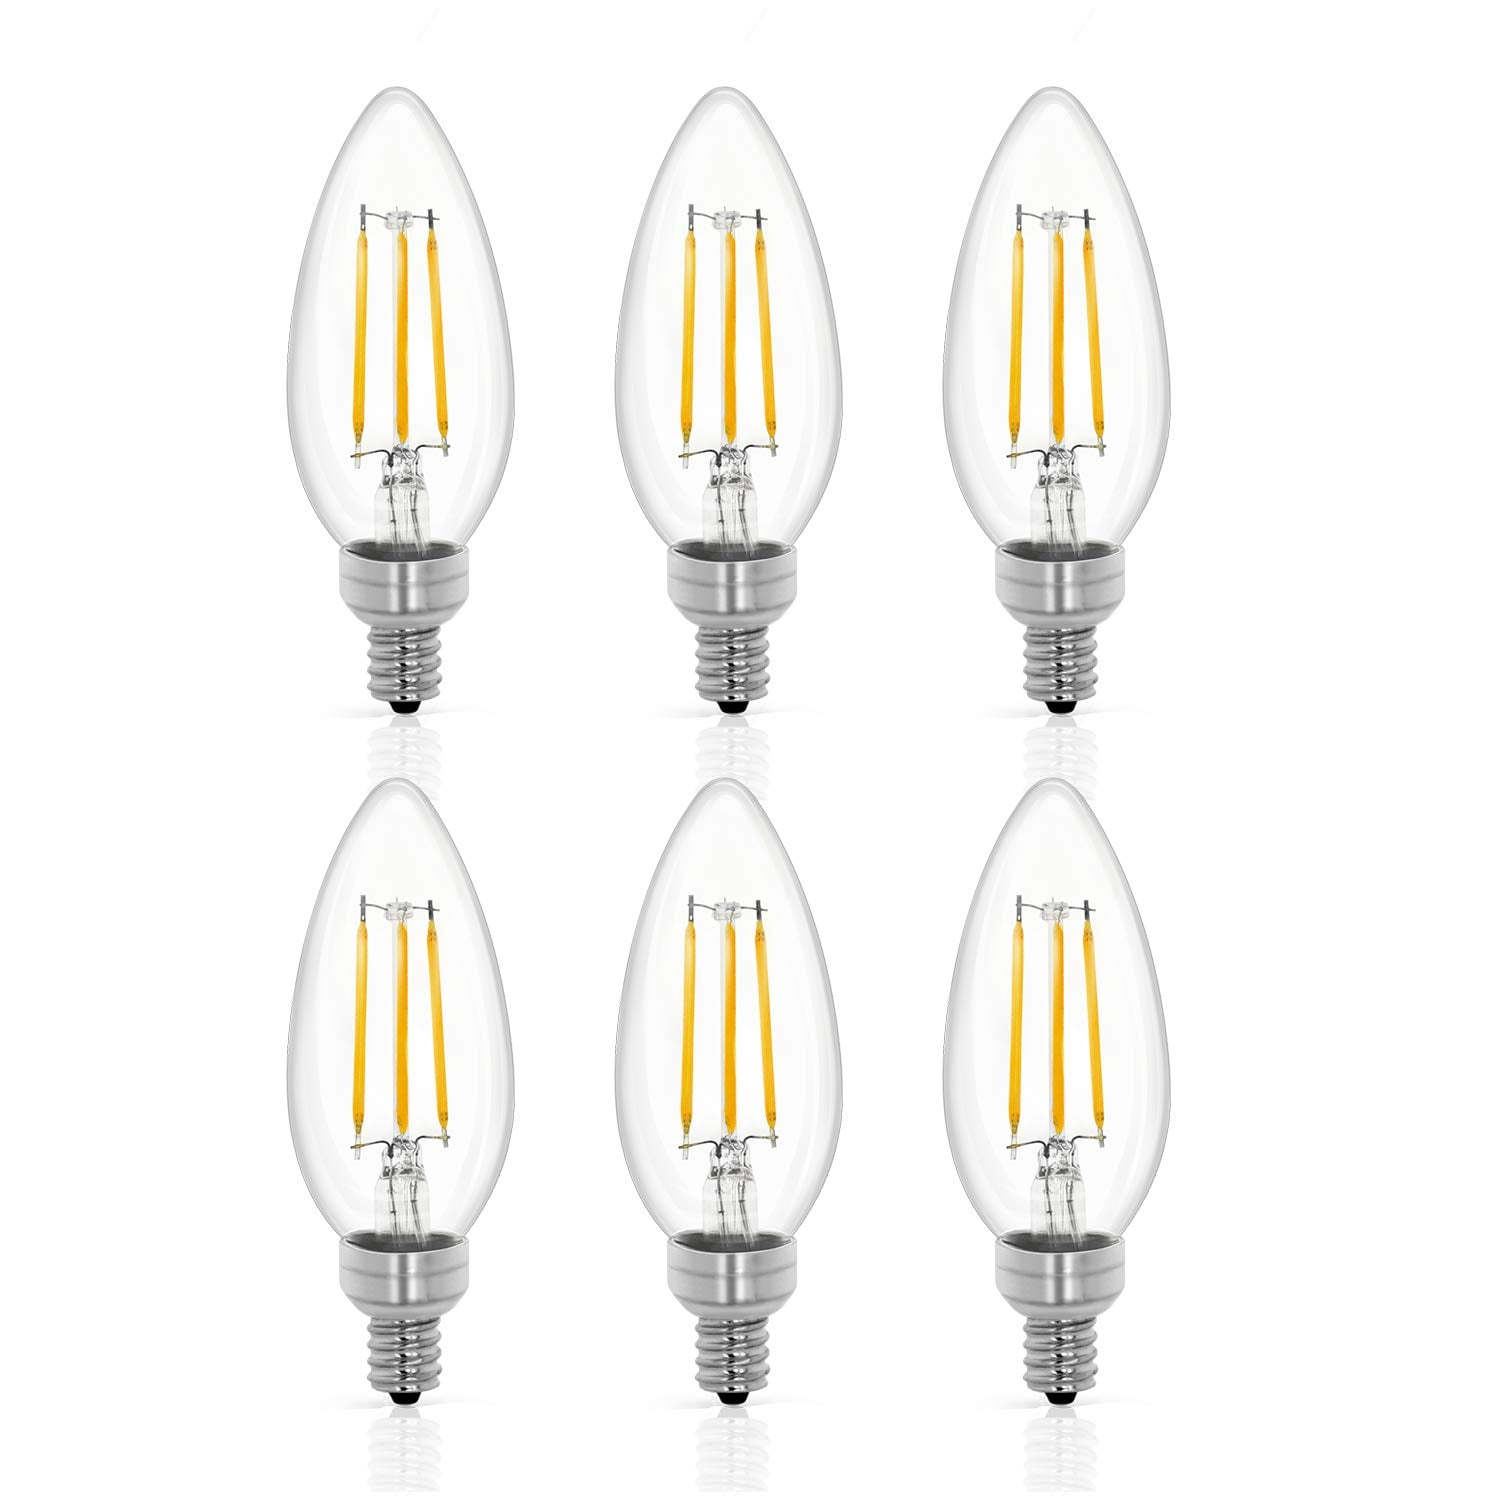 Eterbiz Dimmable E12 LED Bulbs 5000K Daylight White Candelabra Light Bulbs 6W LED Bulbs Chandelier Decorative Candle Base 550 Lumens Home Lighting 60Watt Equivalent Ceiling Fan Light 6-Pack 